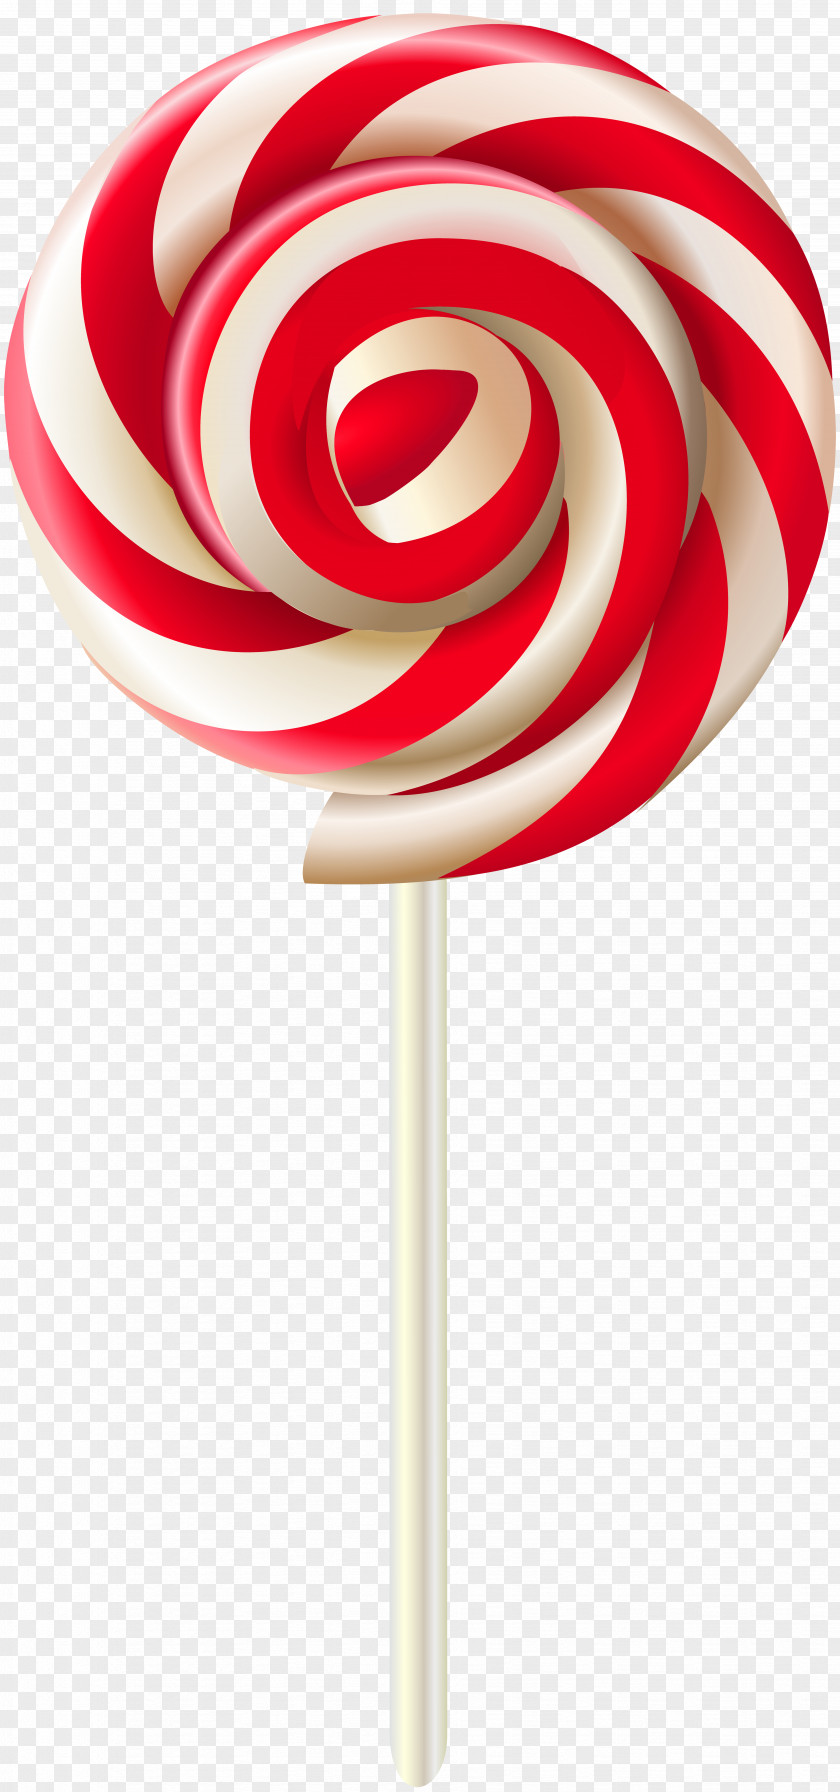 Red Swirl Lollipop Transparent Clip Art Image Font Design Product PNG